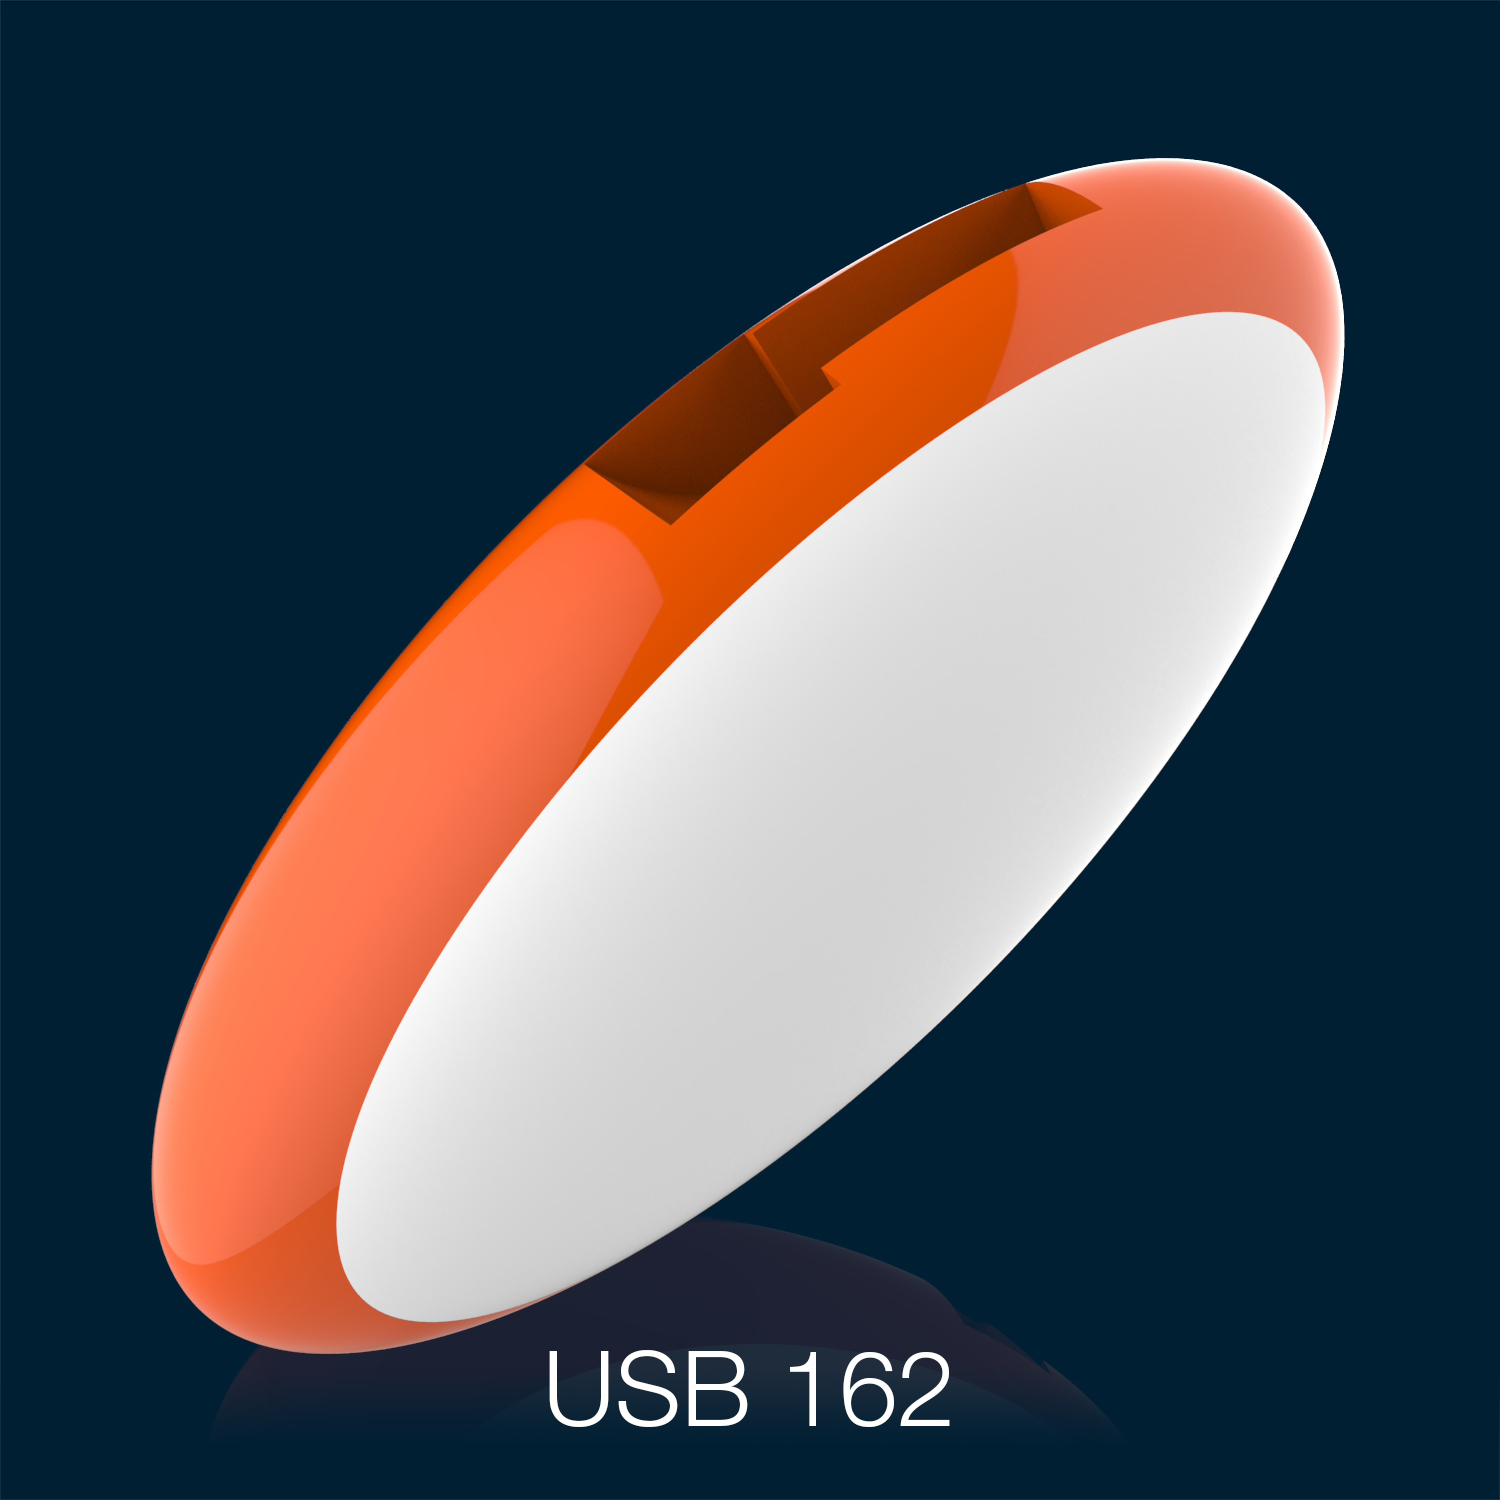 USB 162